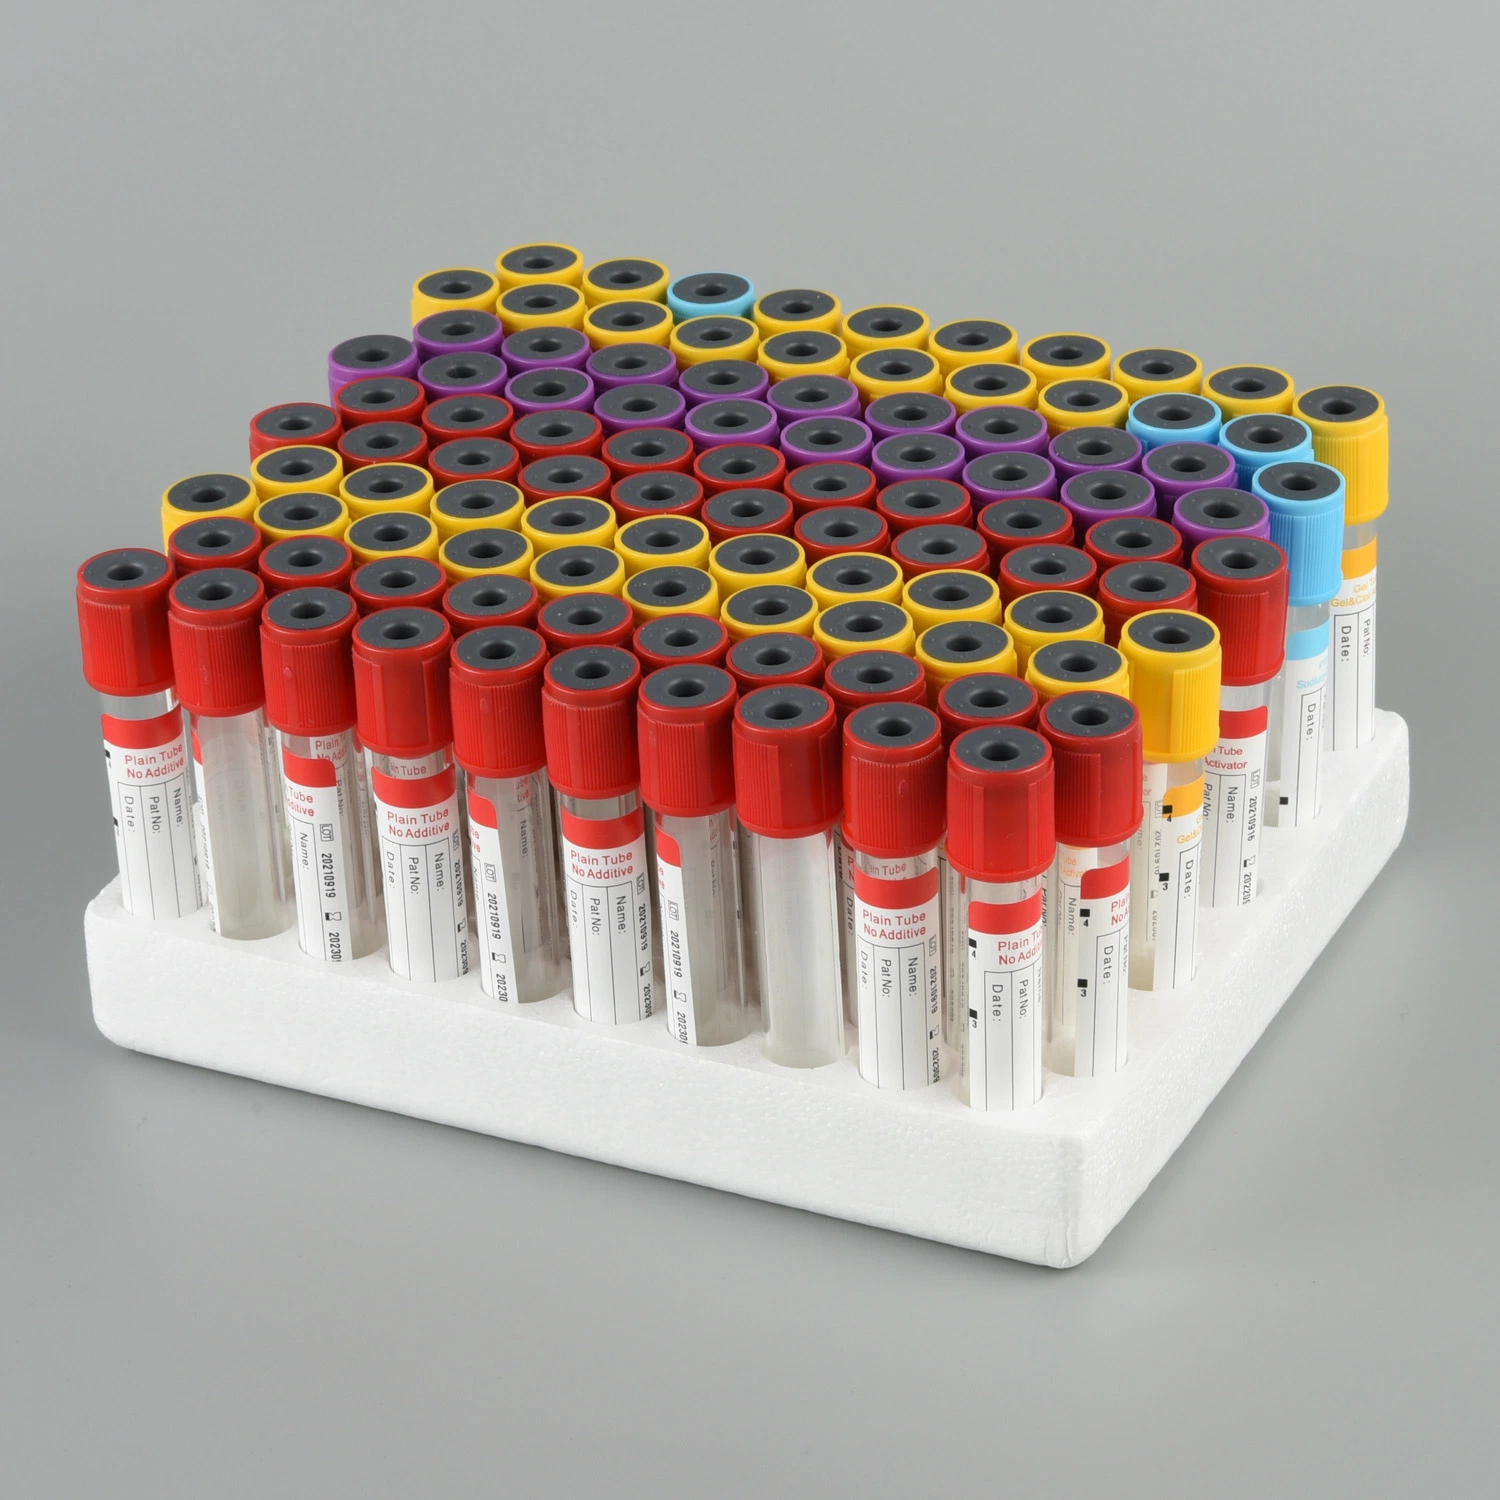 Disposable Medical Blood Collection Specimen Tube